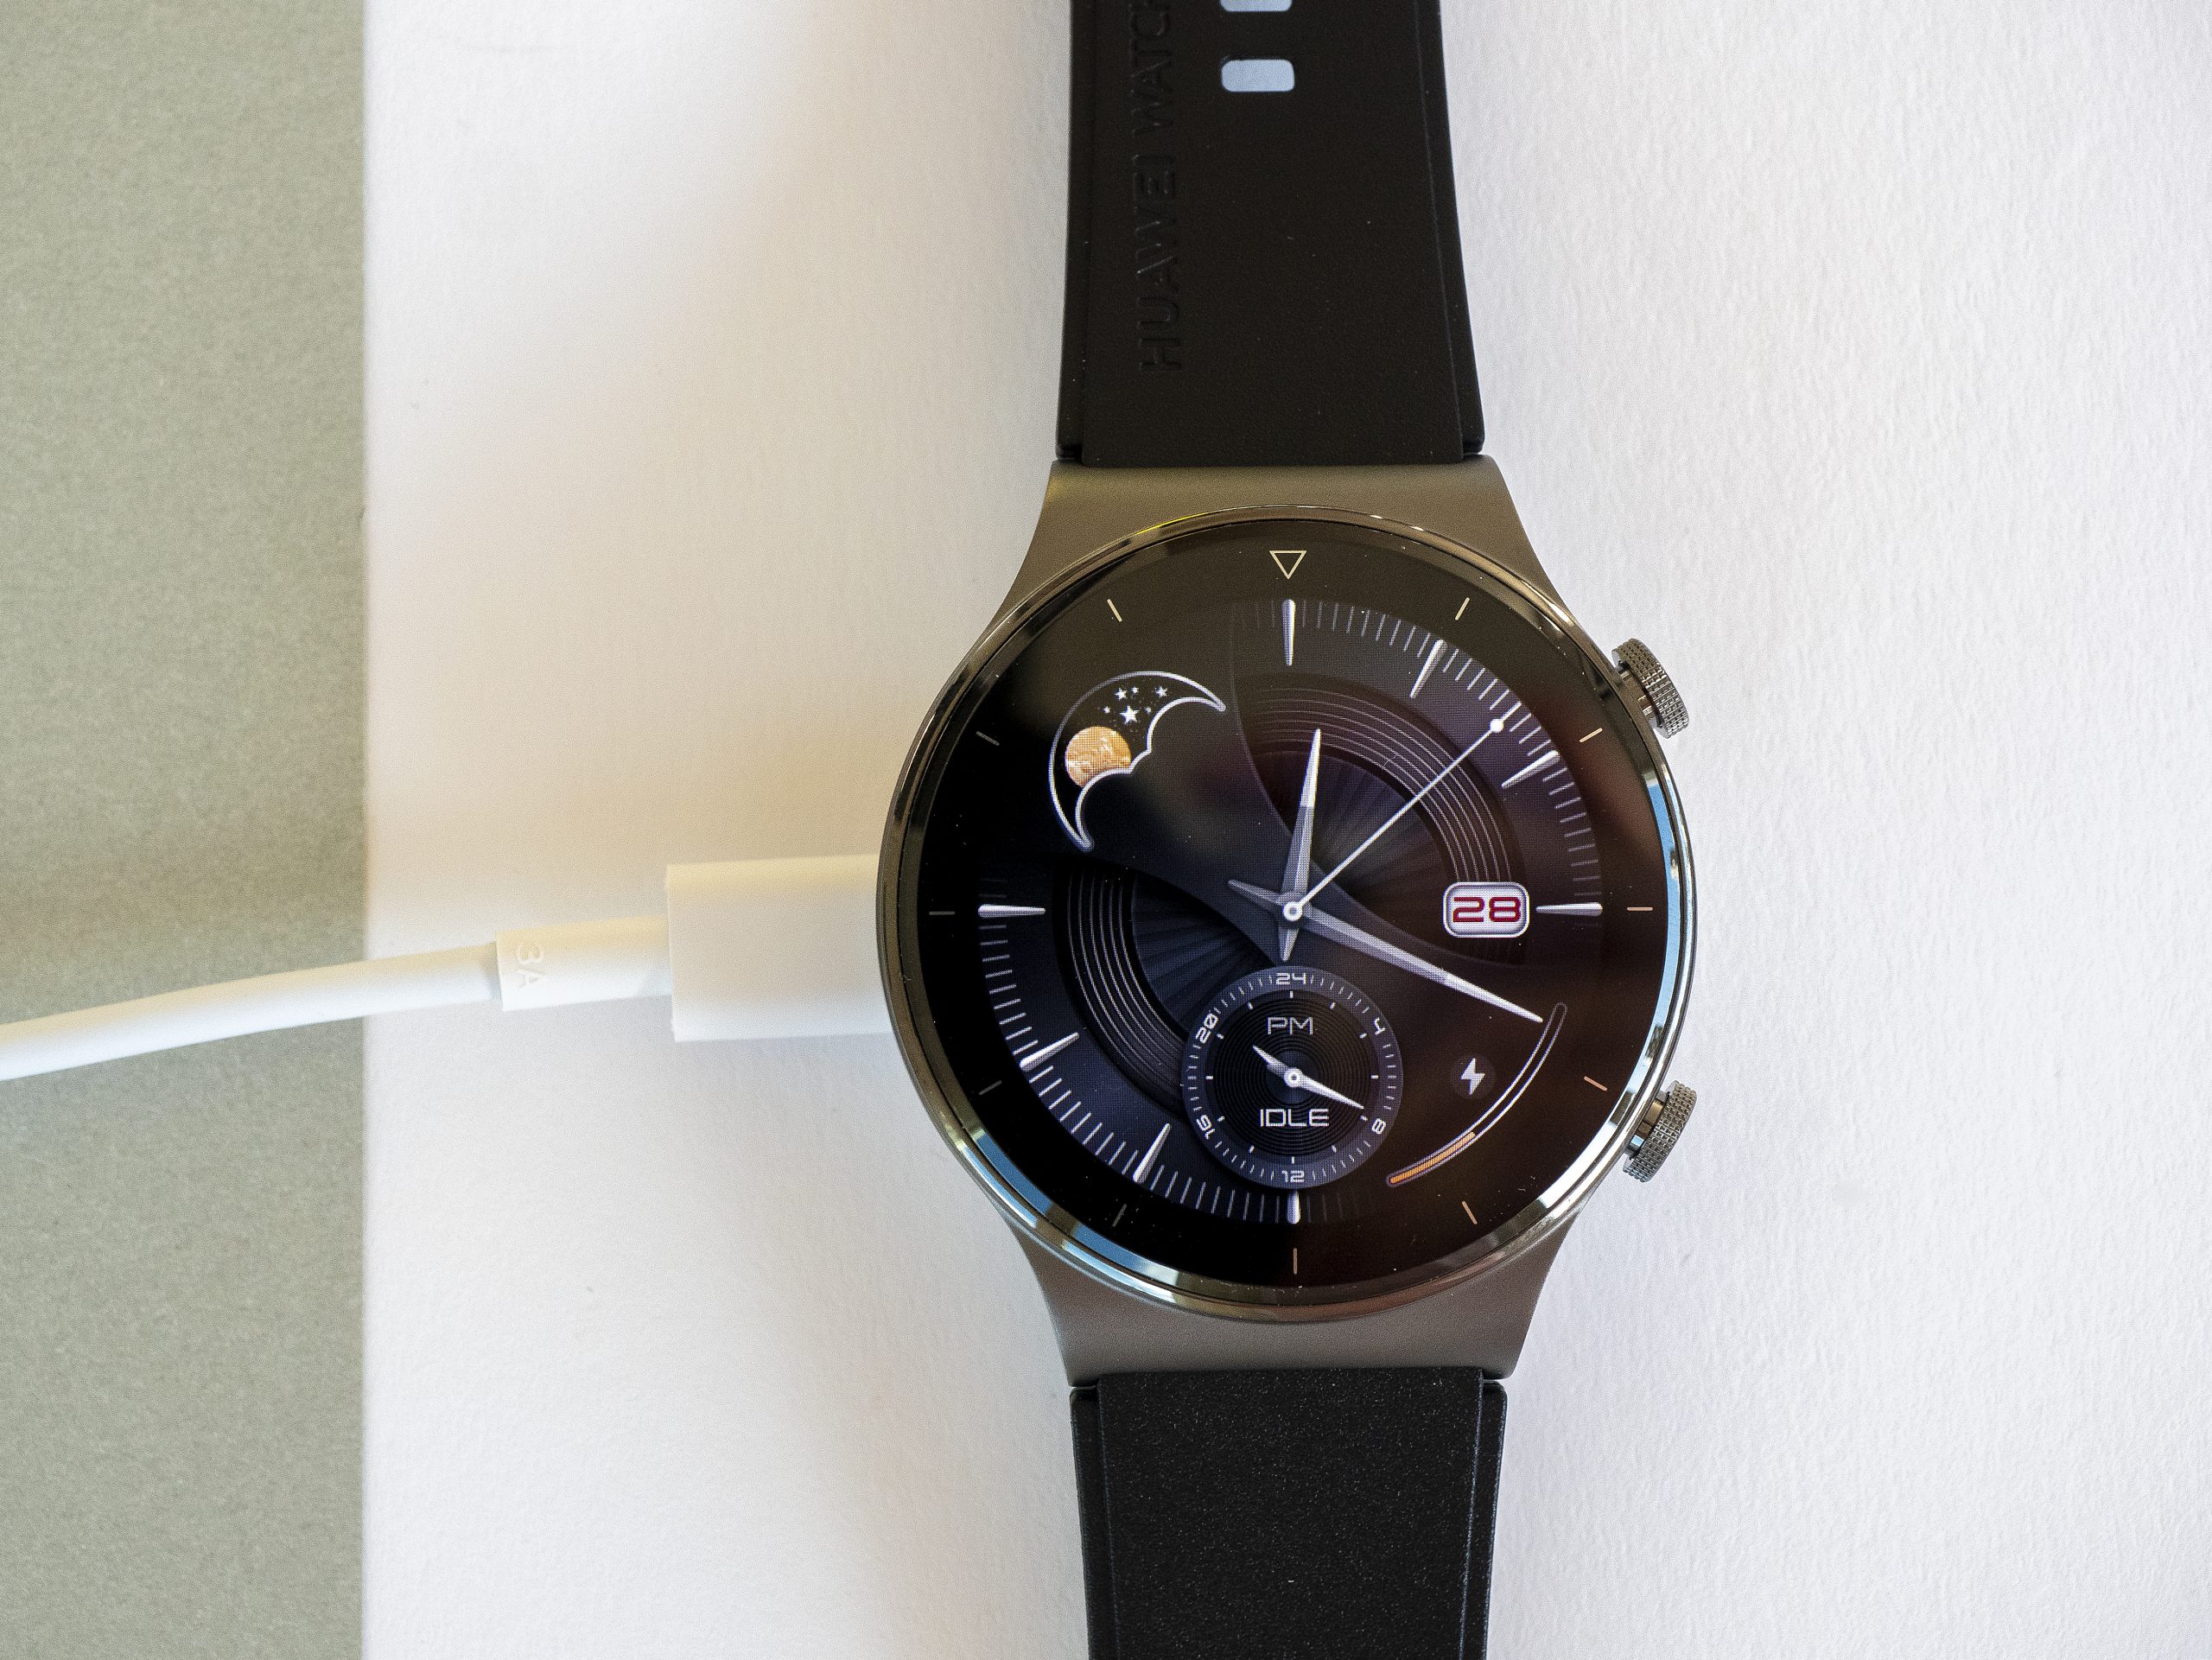 Review: Huawei Watch GT2 Pro | A More Useful Smartwatch